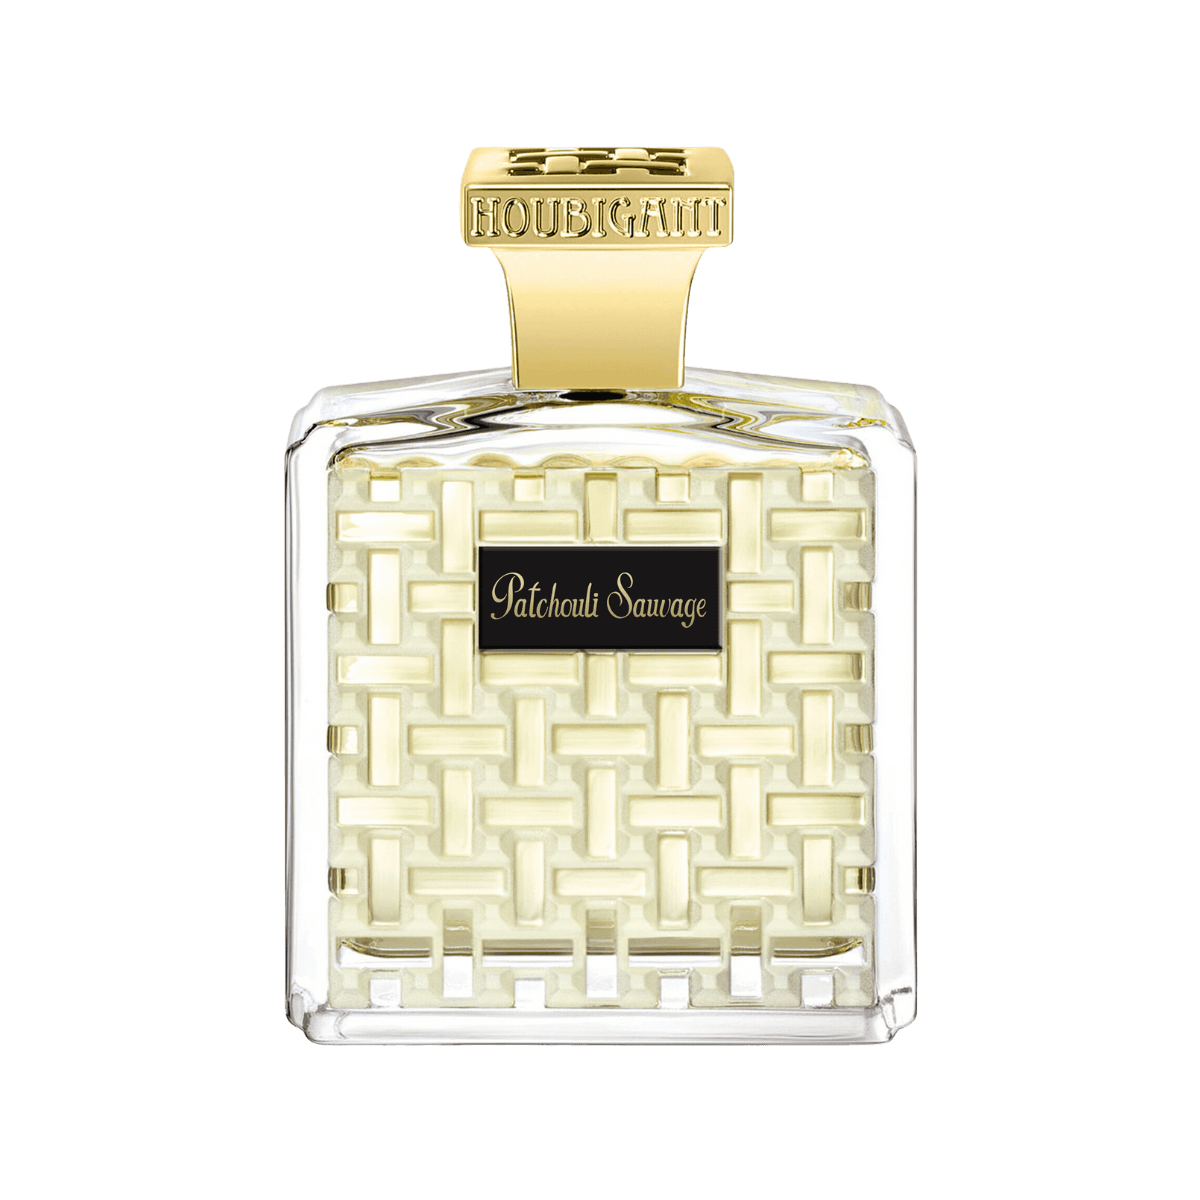 Image of Patchouli Sauvage eau de parfum by the perfume brand Houbigant